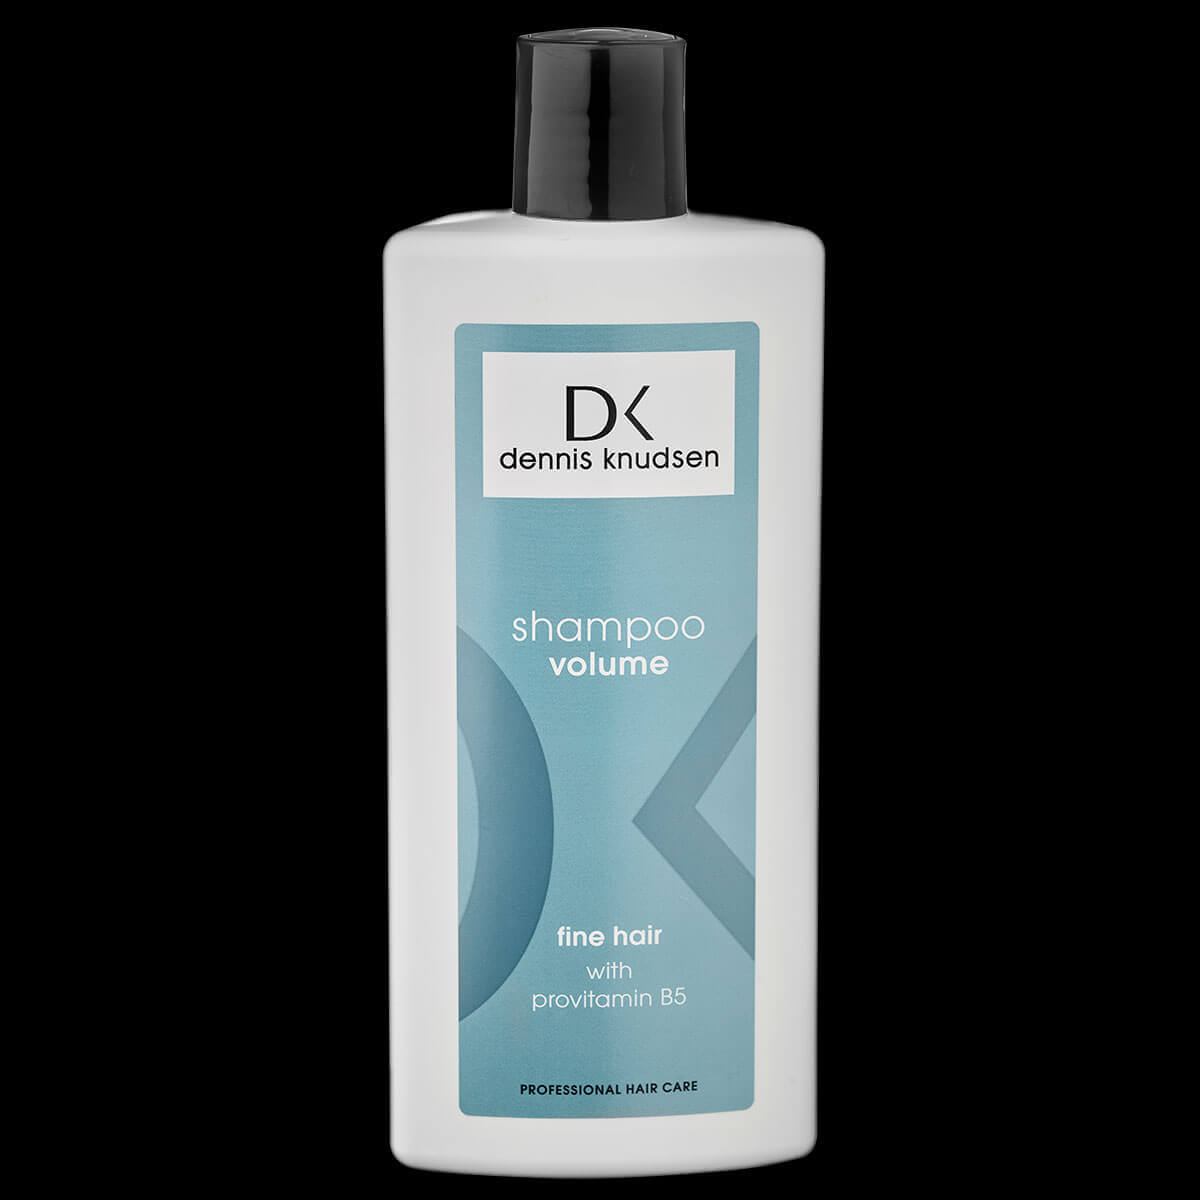 shampoo volume fine hair dennis knudsen professional